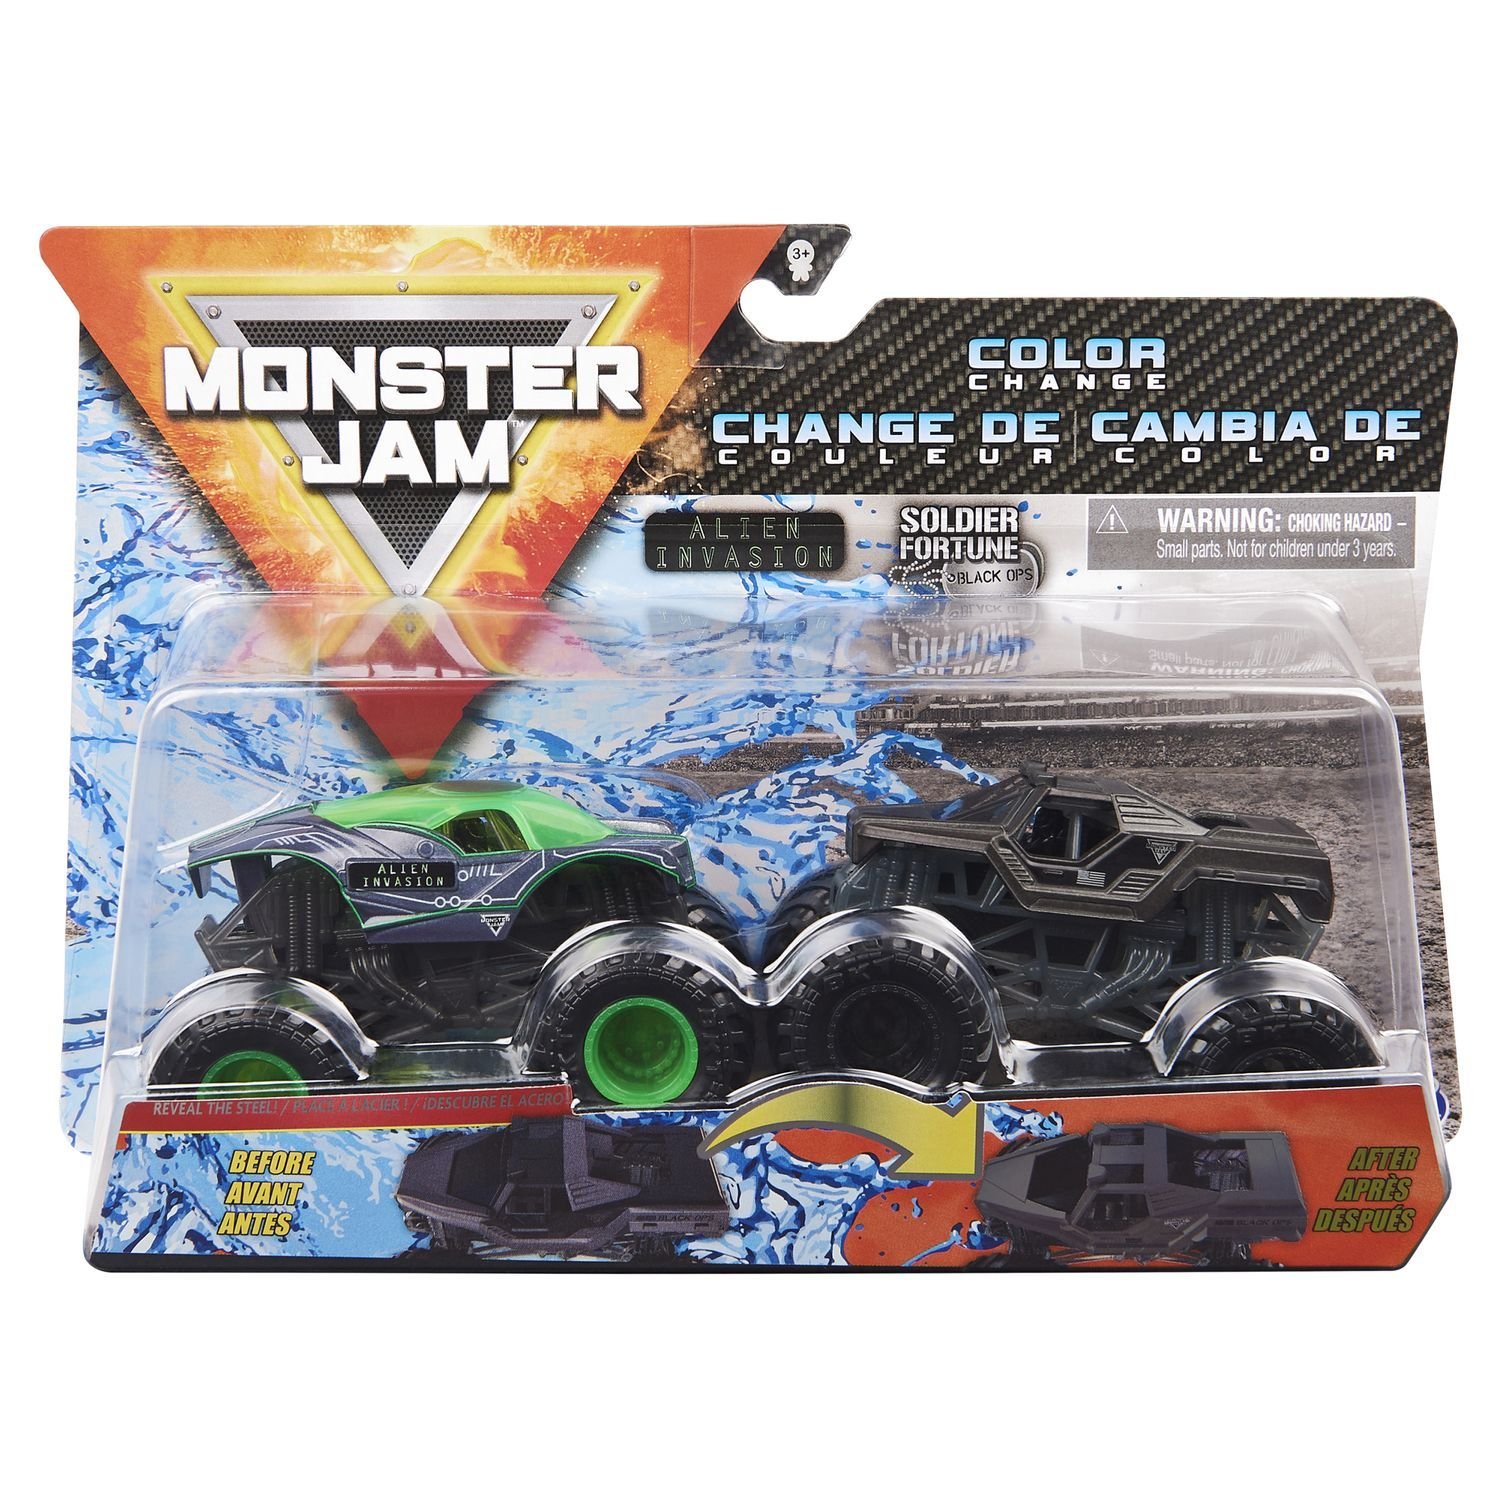 Машинка Monster Jam 1:64 2шт AlinInvasnVSoldrFortuneBlkOp6044943/20124306